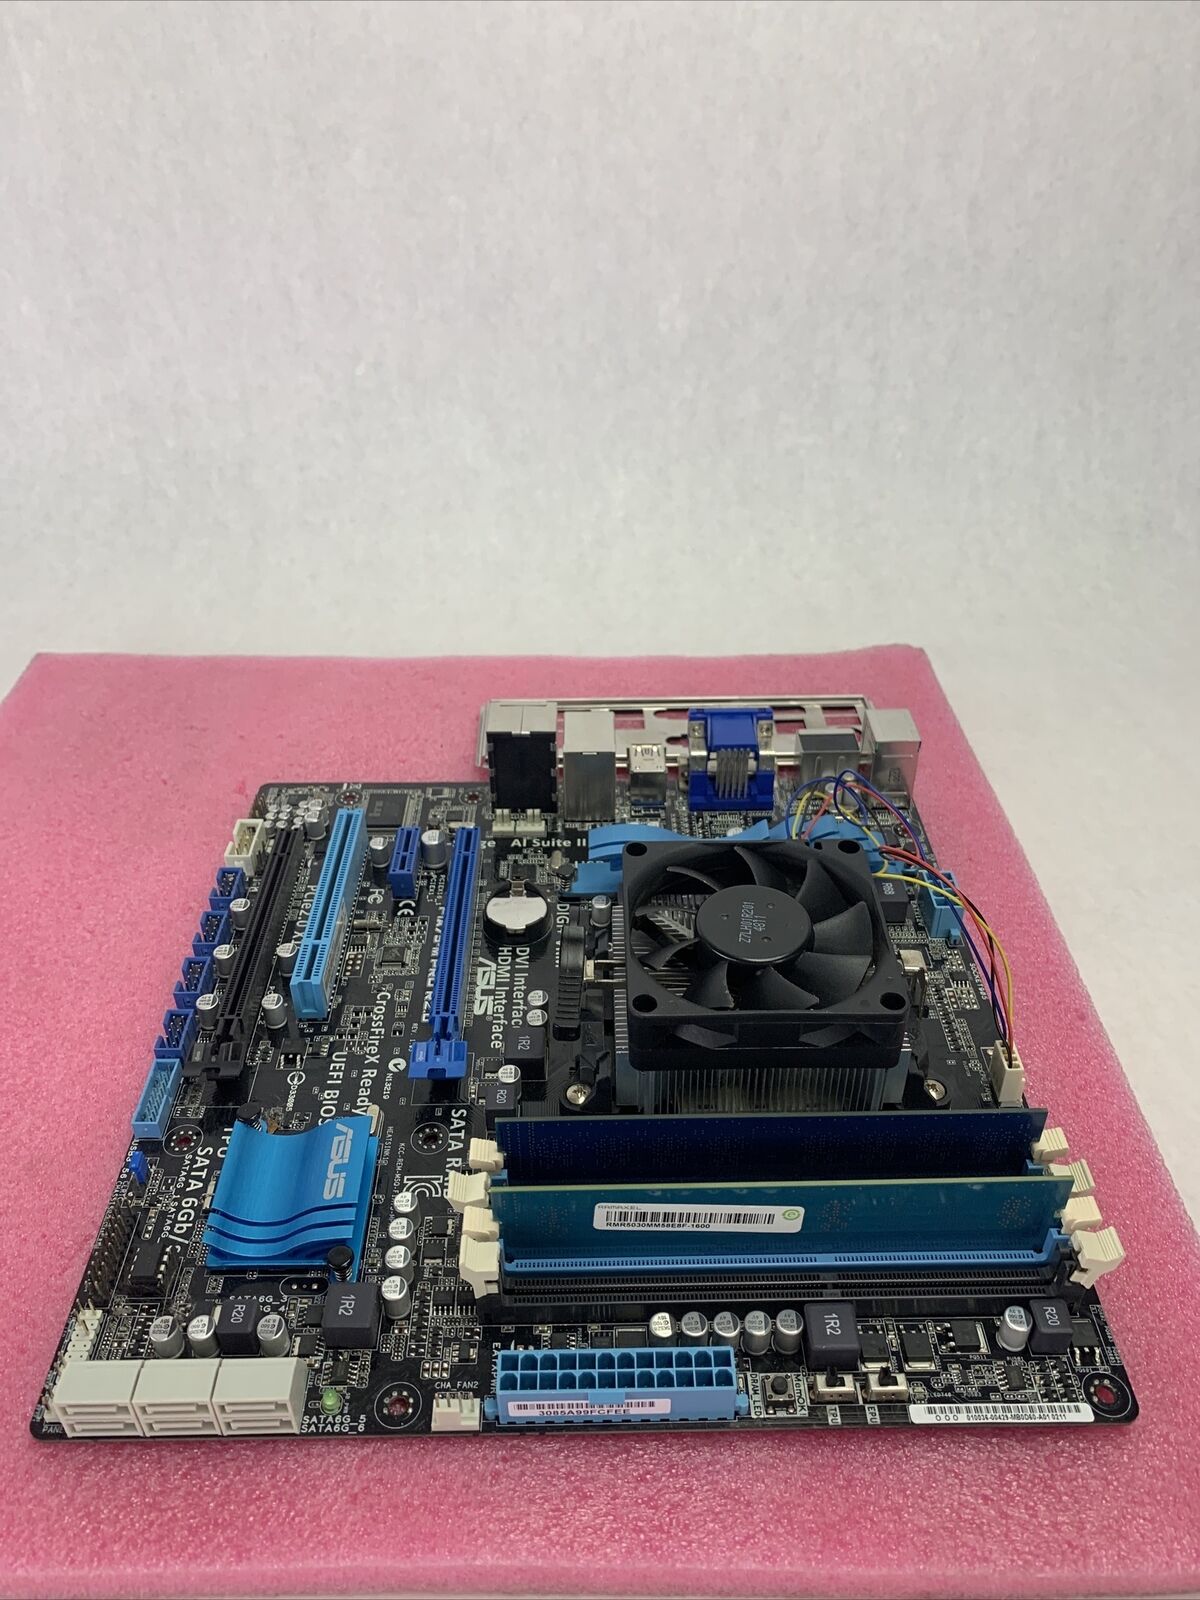 ASUS F1A75-M-Pro Rev 2.0 Motherboard AMD A4-3400 2.7GHz 4GB RAM w/Shield